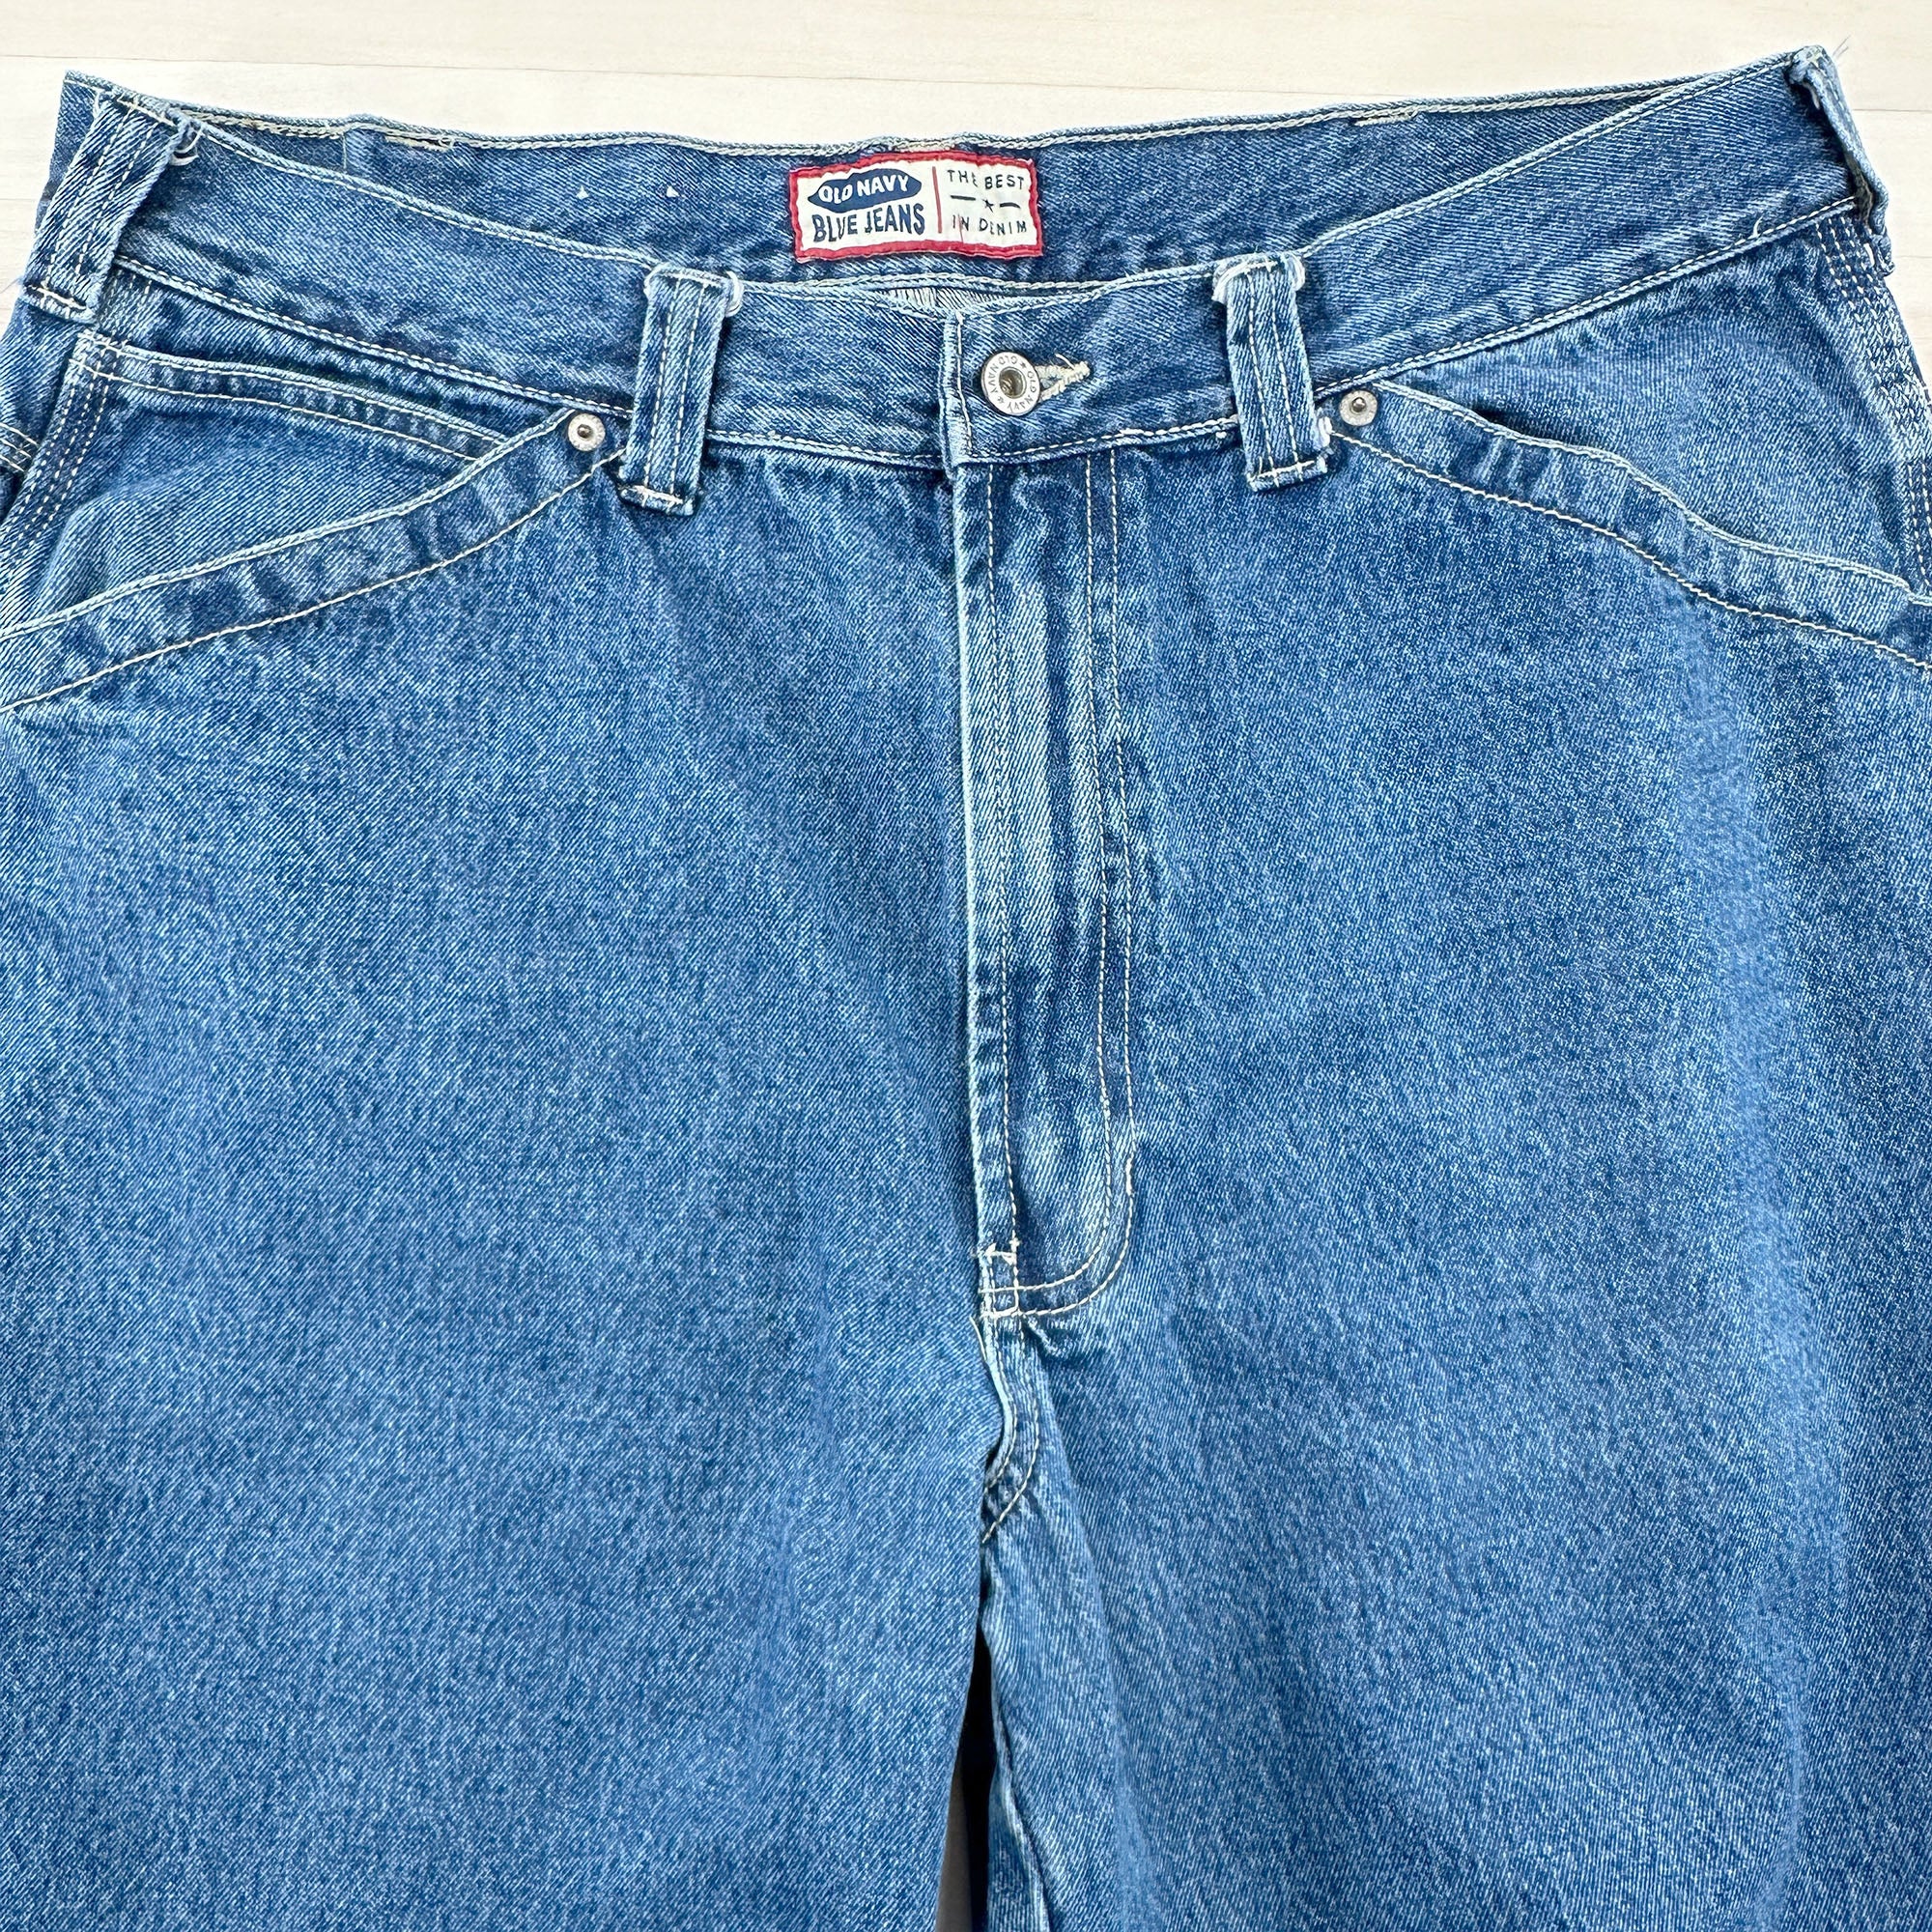 Vintage Old Navy Carpenter Jeans 36 Long (36x34) Great Lakes Reclaimed Denim